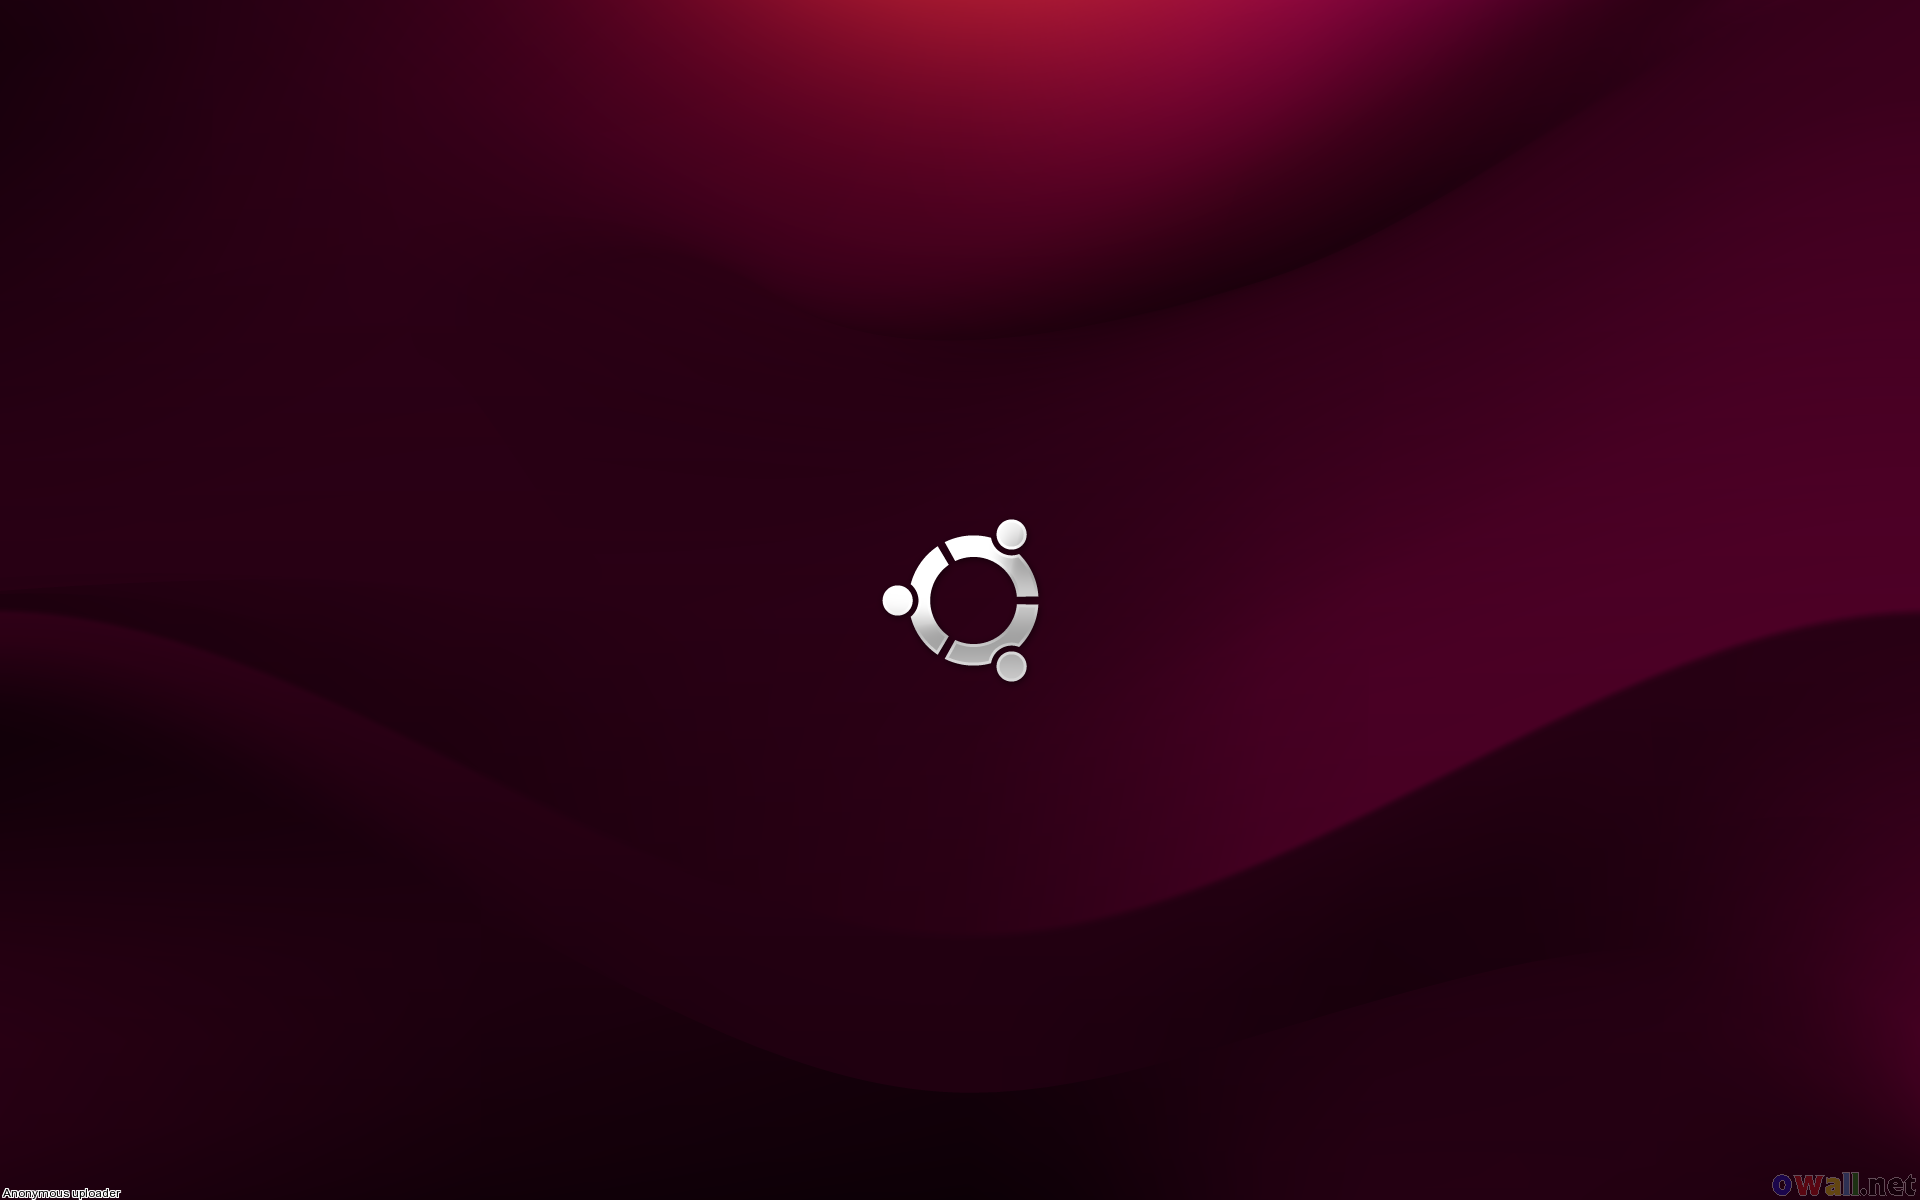  linux ubuntu wallpaper desktop backgrounds download wallpaper hd 1920x1200